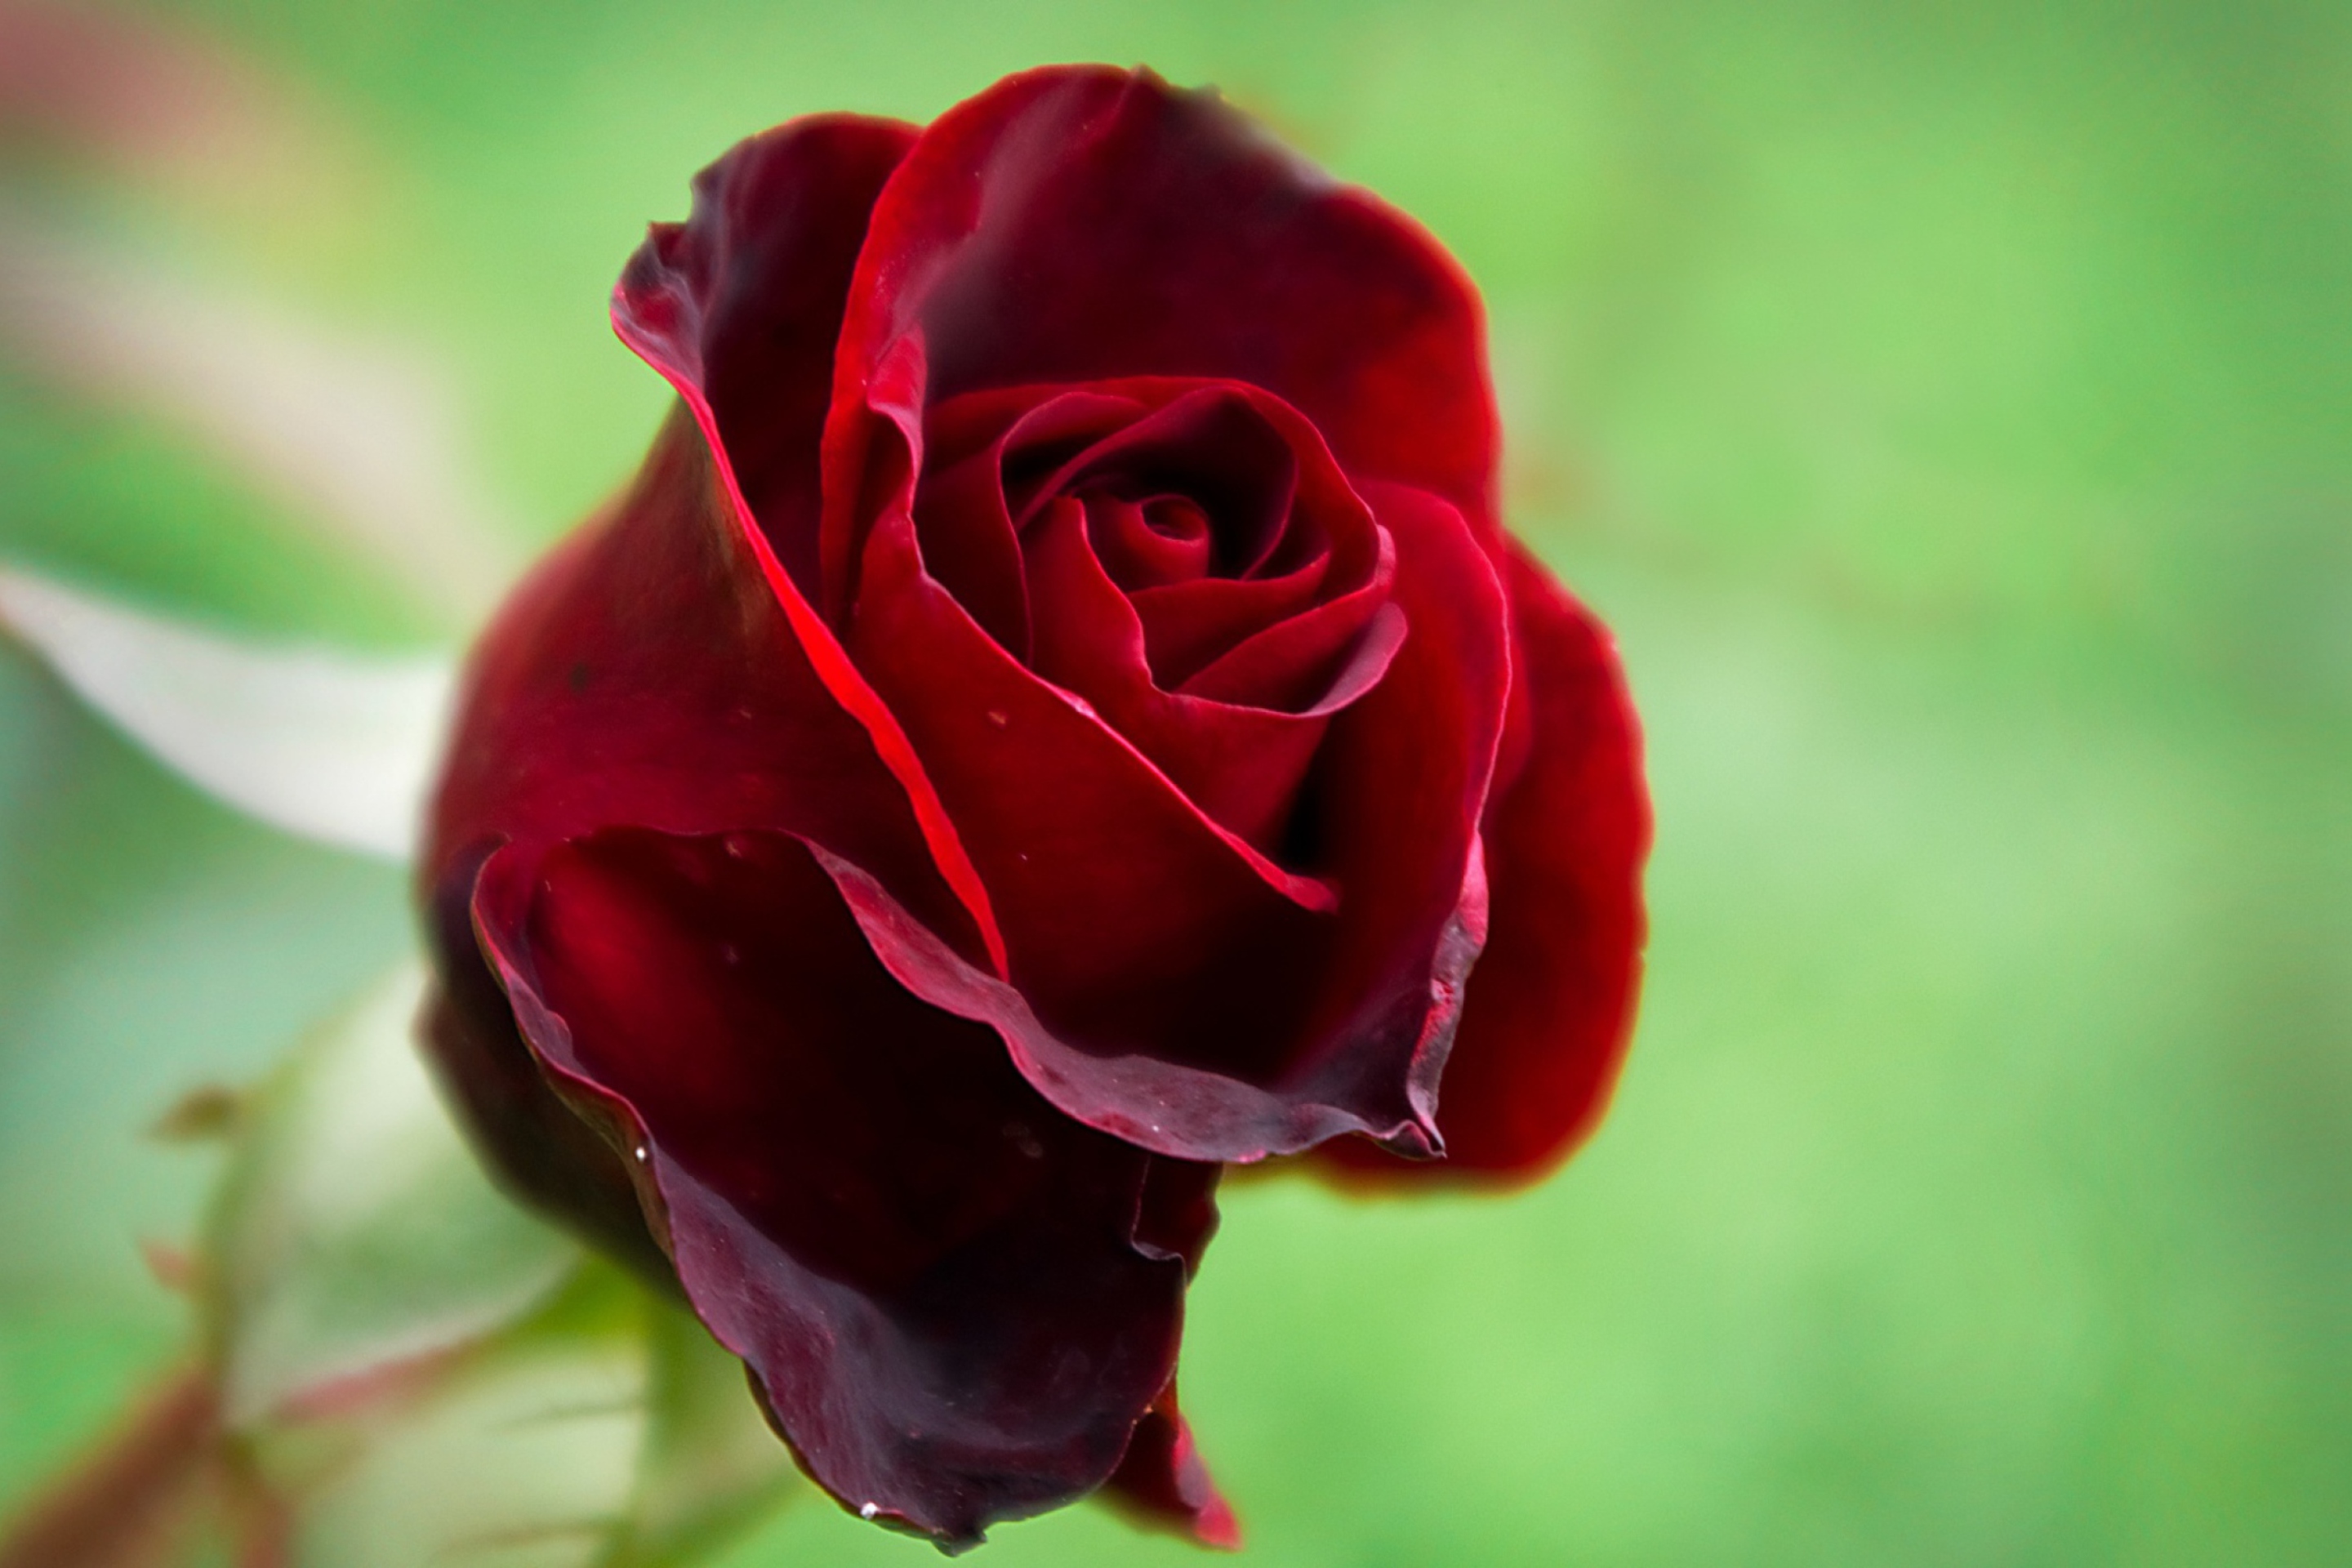 Rose is beautiful. Бутон красной розы.